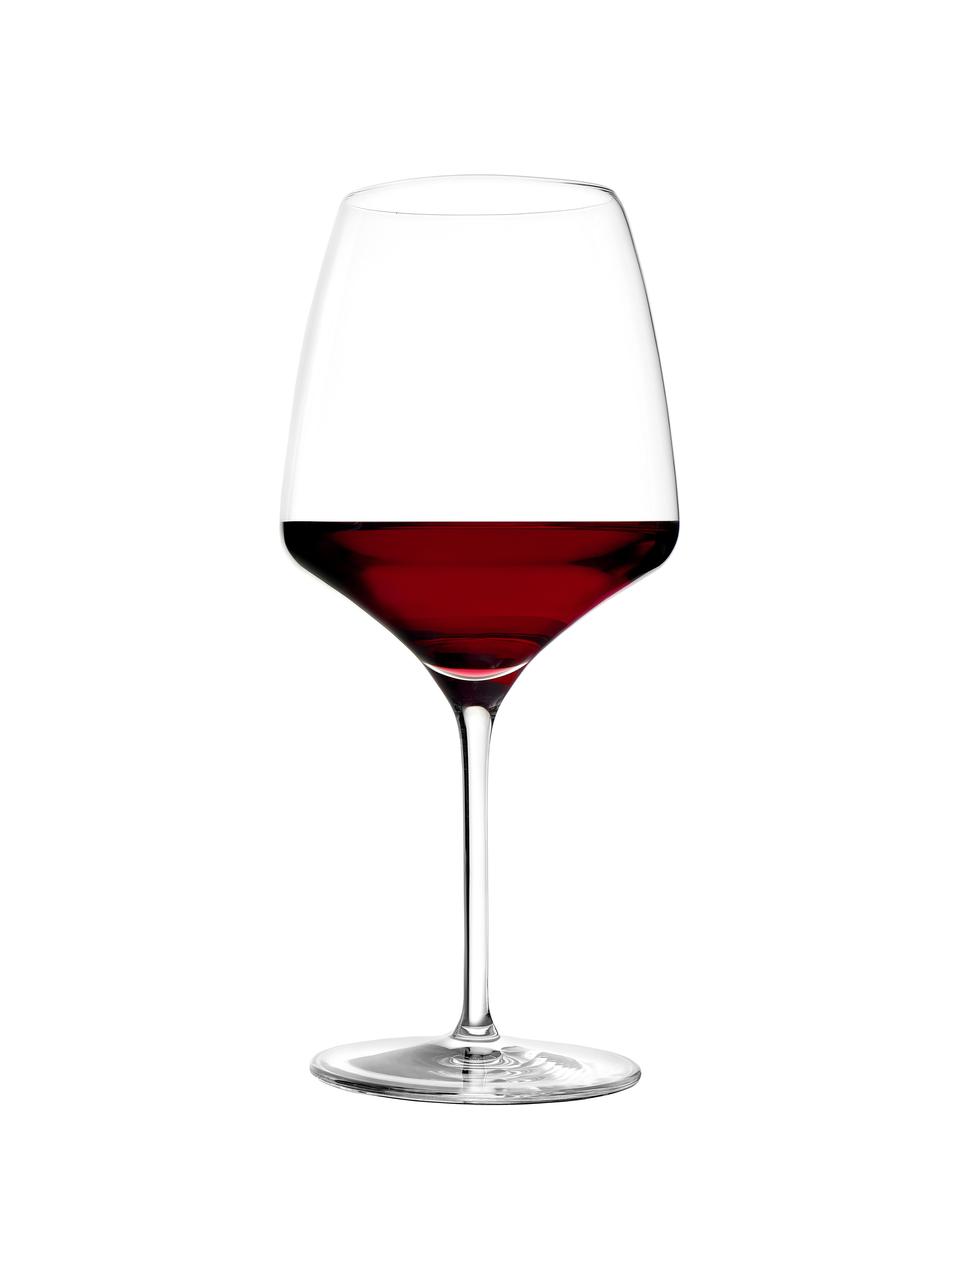 Bolvormige Kristallen rode wijnglazen Experience, 6 stuks, Kristalglas, Transparant, Ø 11 x H 23 cm, 645 ml